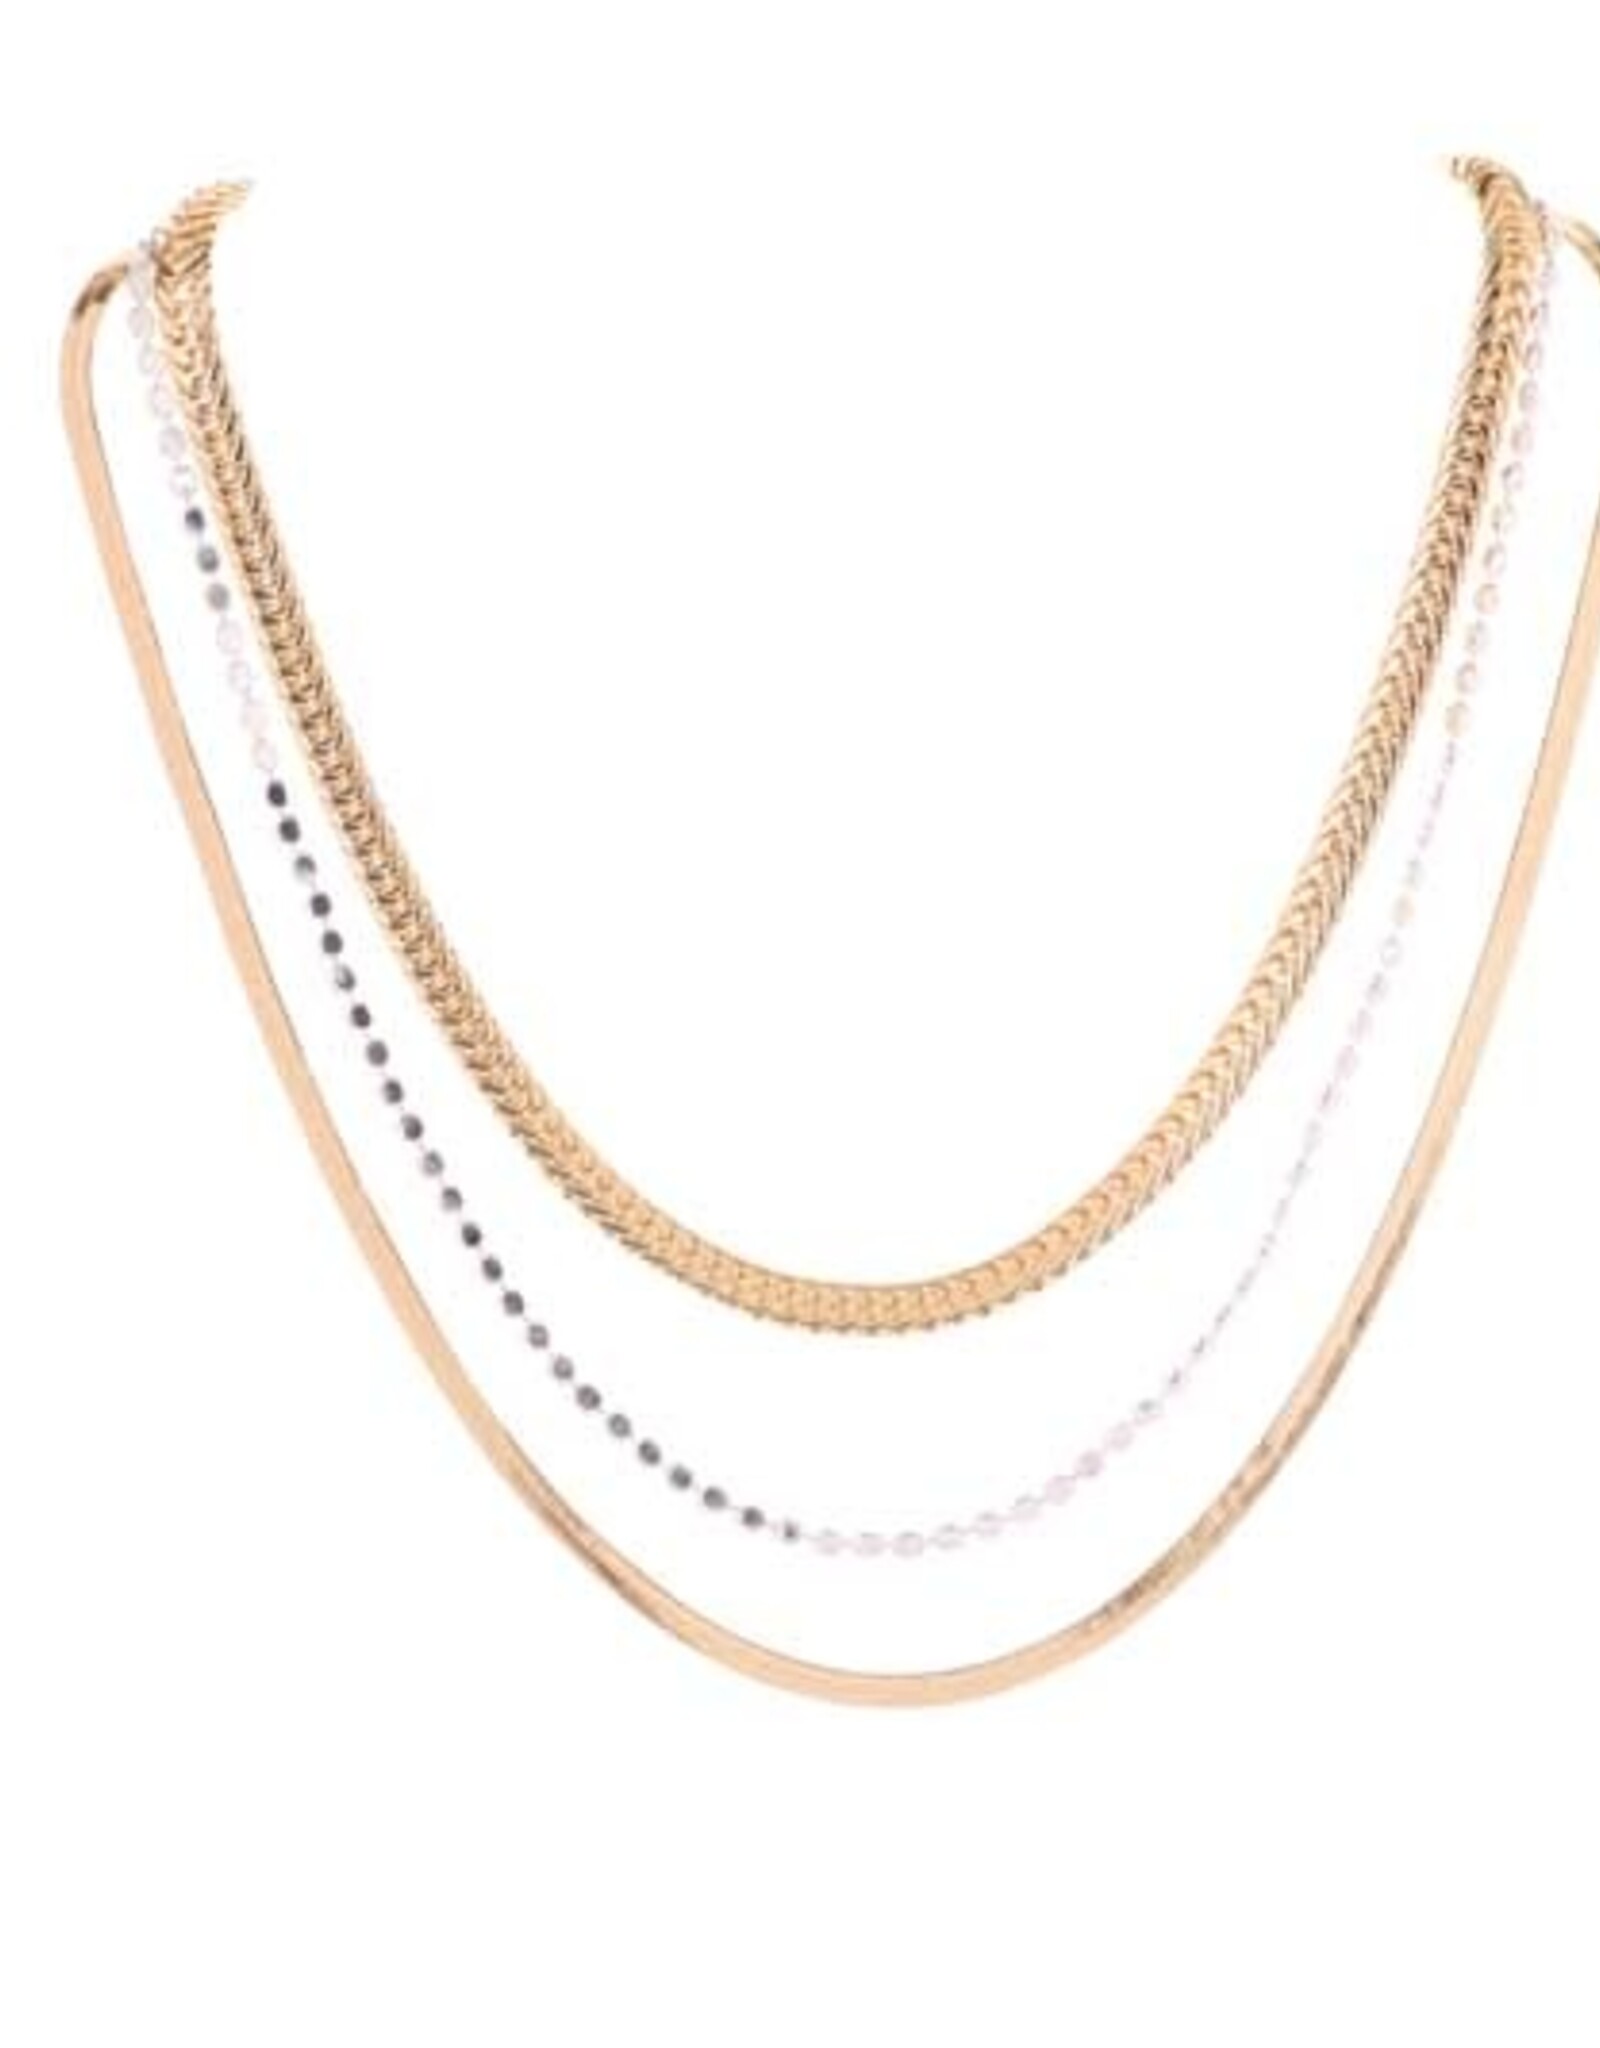 Merx Inc. Merx Fashion Necklace Shiny Gold+Shiny Silver(middle) 45+7cm